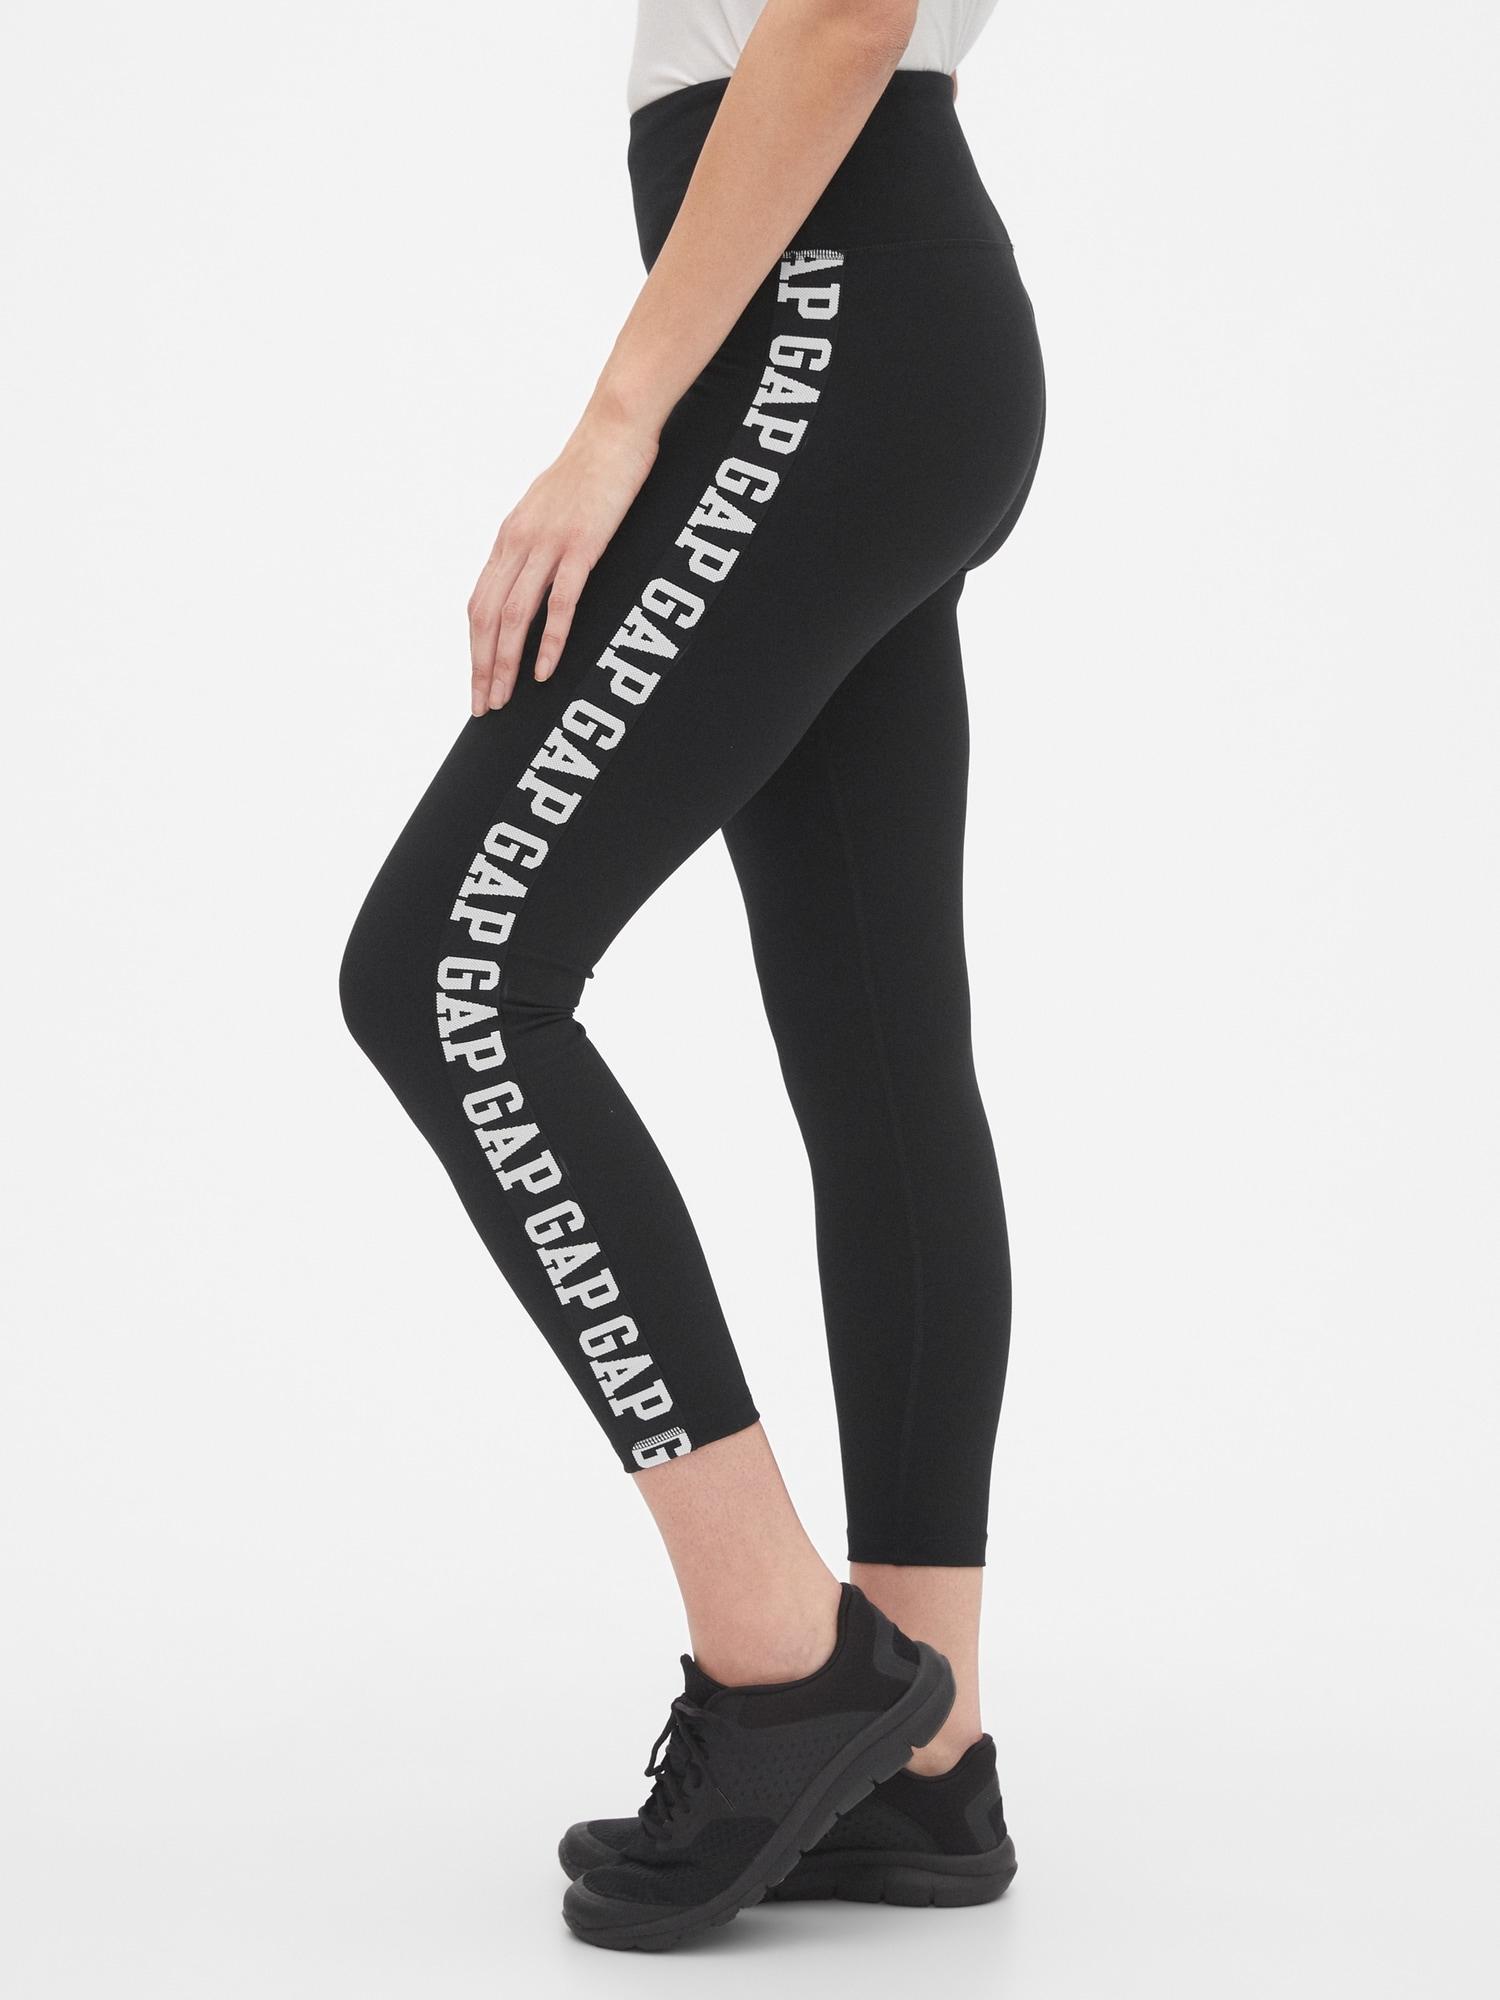 Women's GAP FIT Black Leggings with Silver & Black Swirl Design Size XS